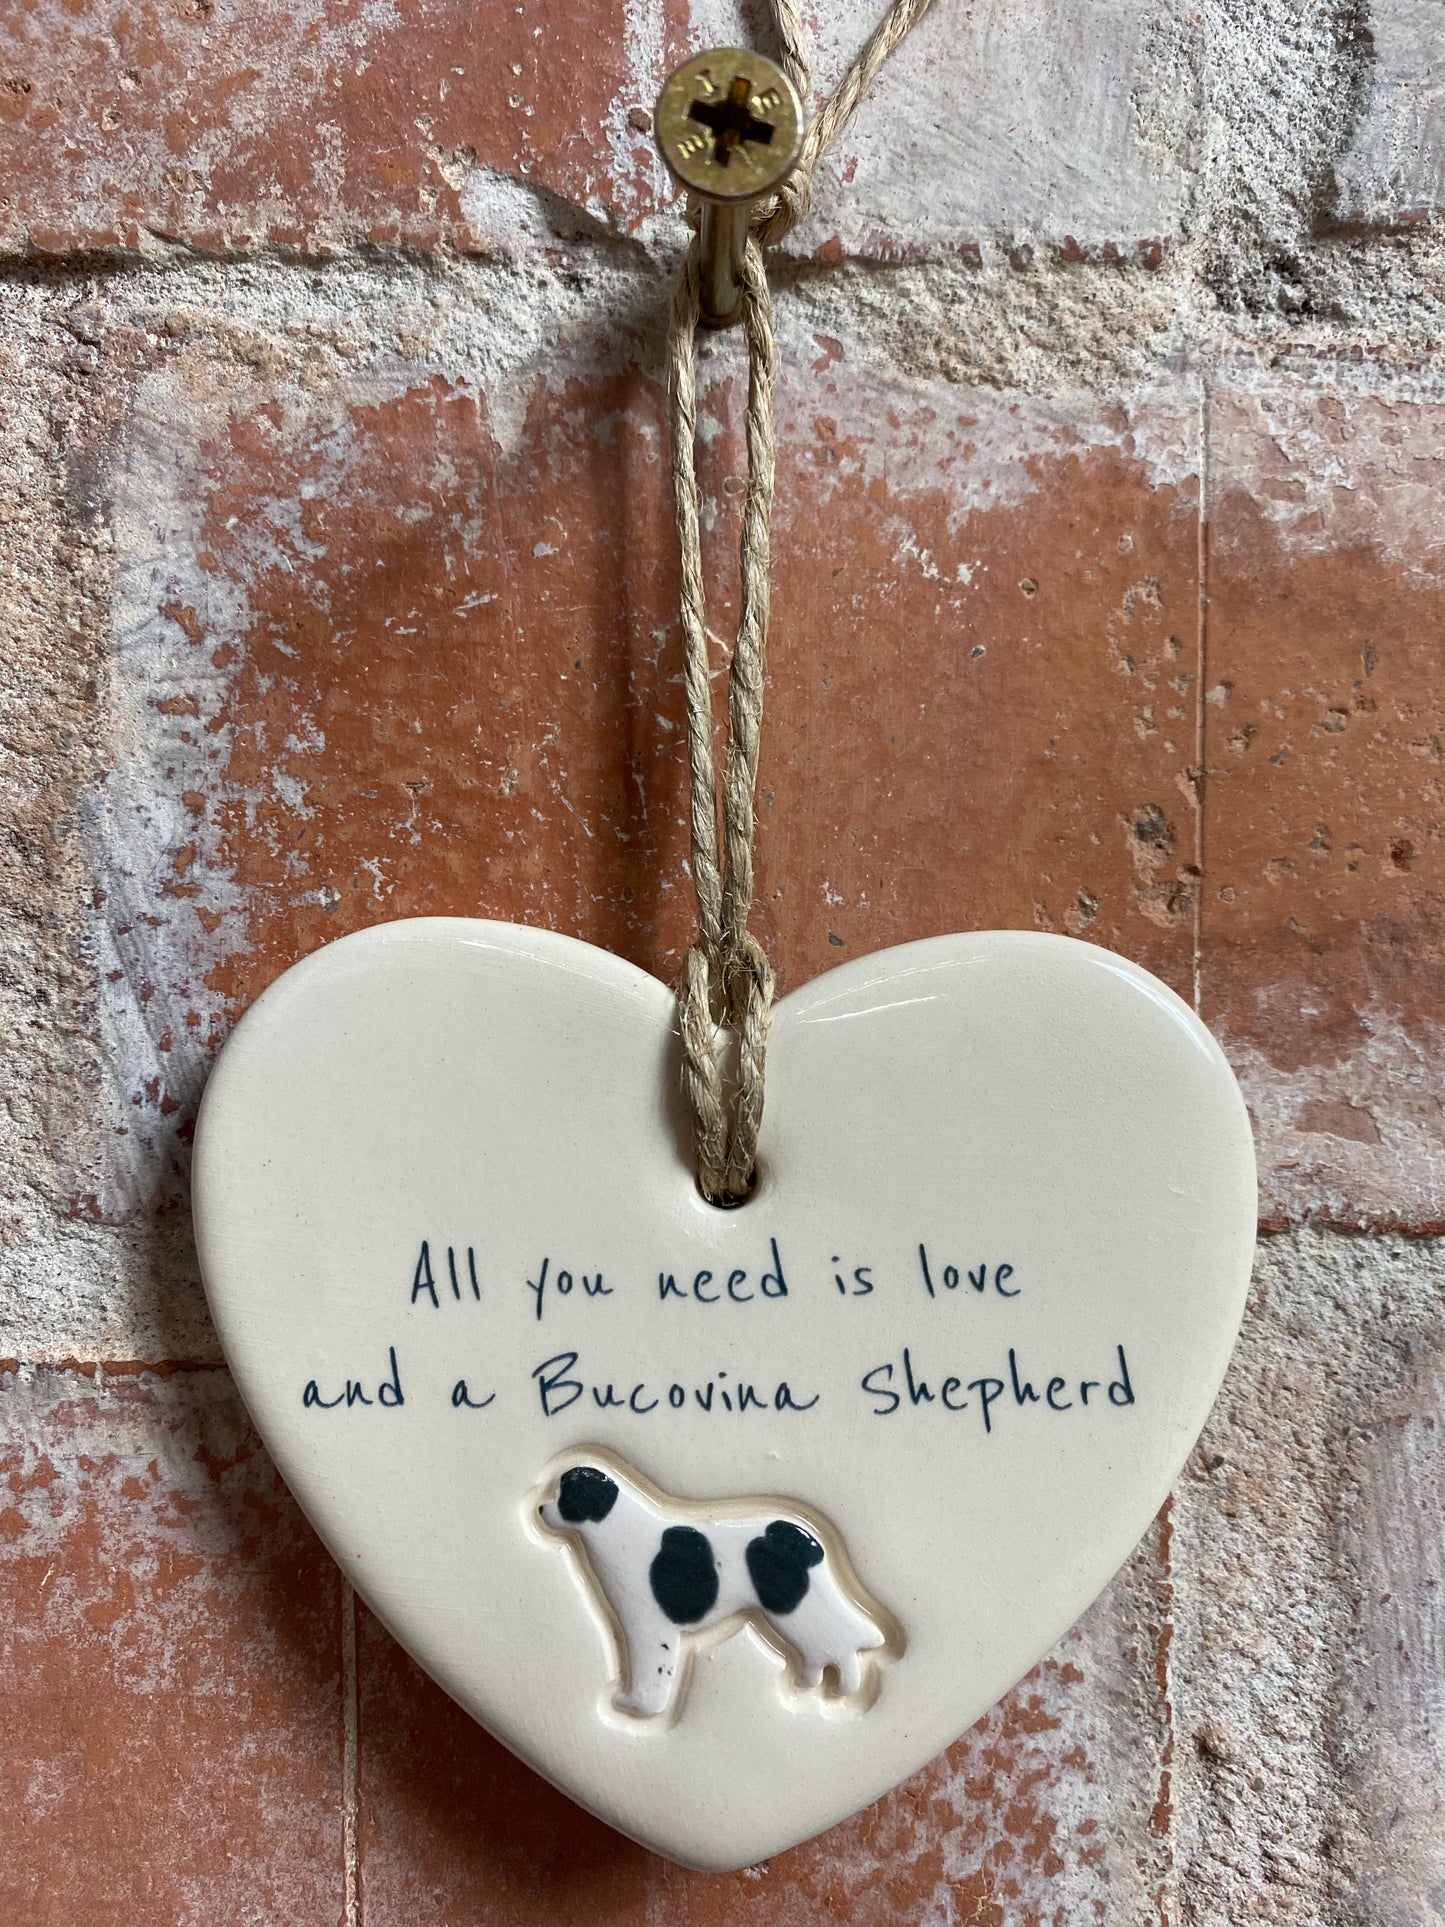 Bucovina Shepherd ceramic heart